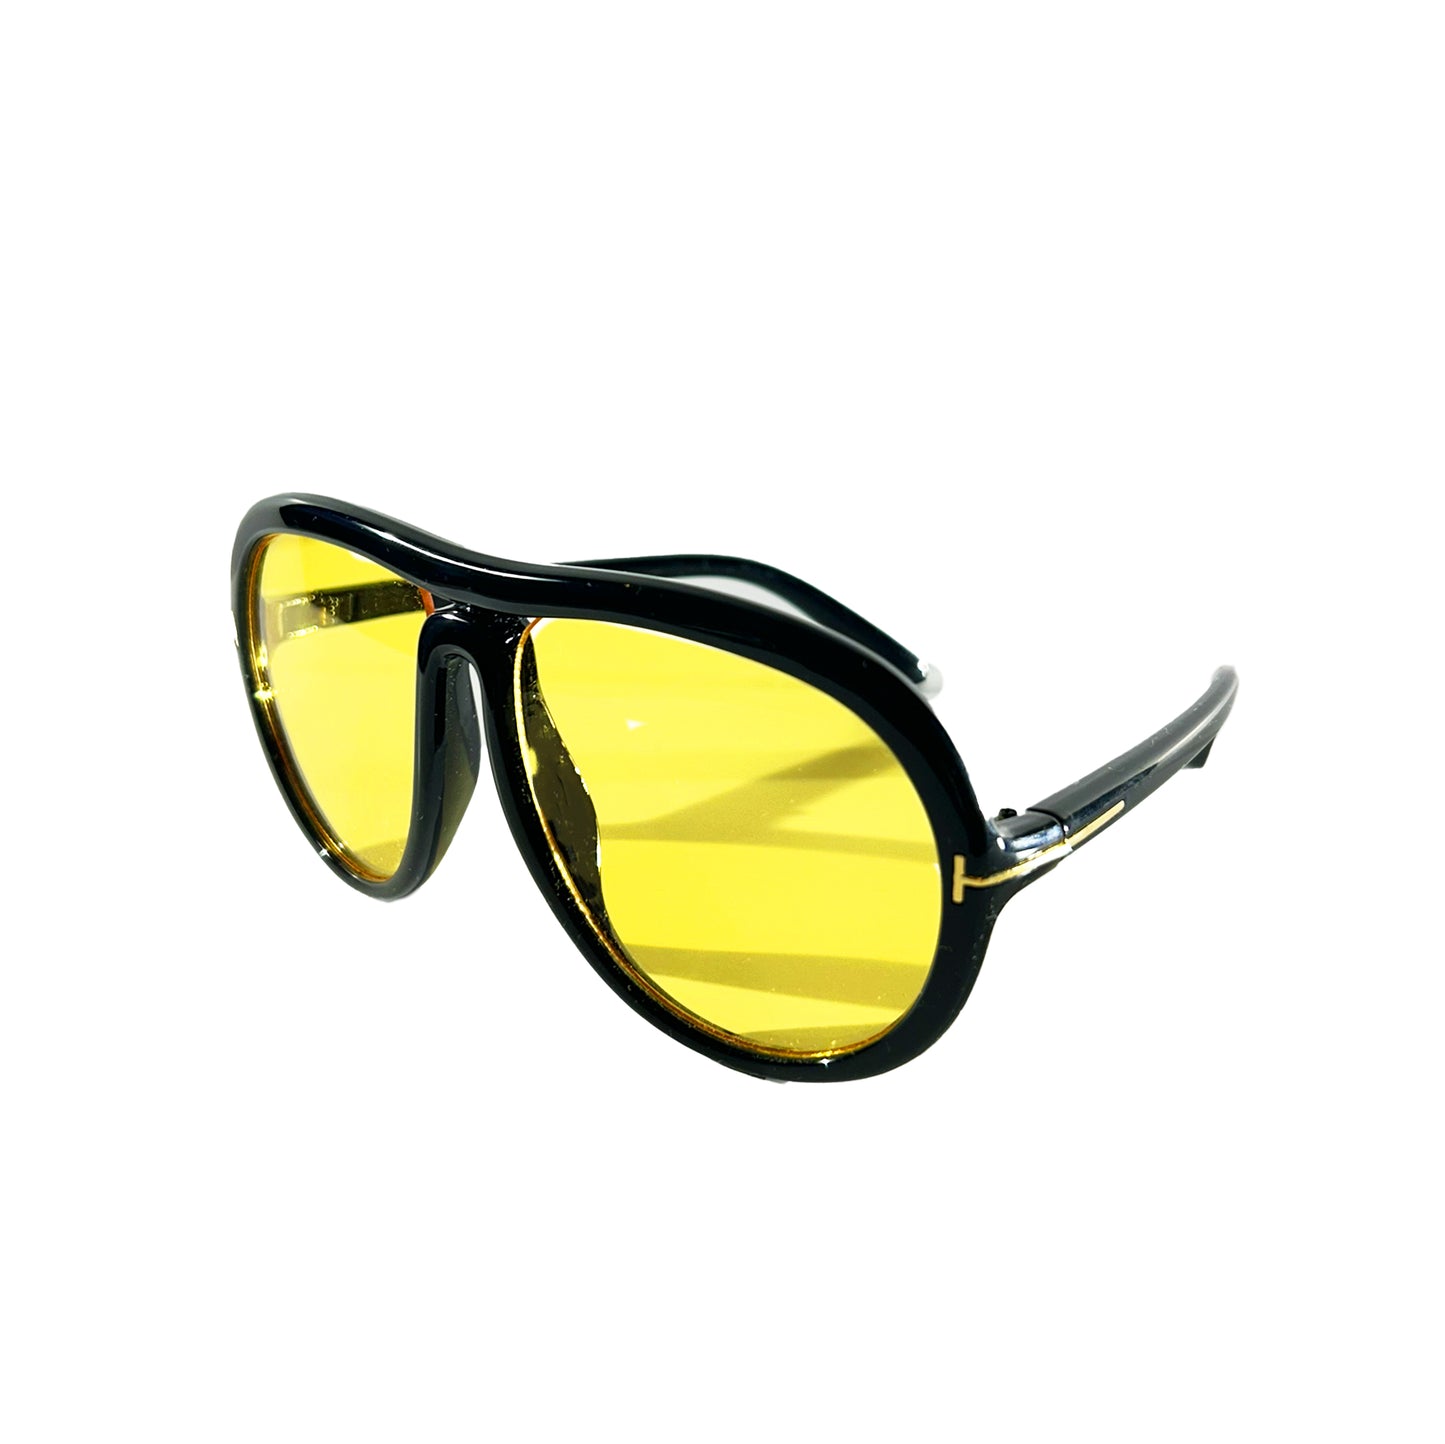 Vintage Sunglasses Aviator Style